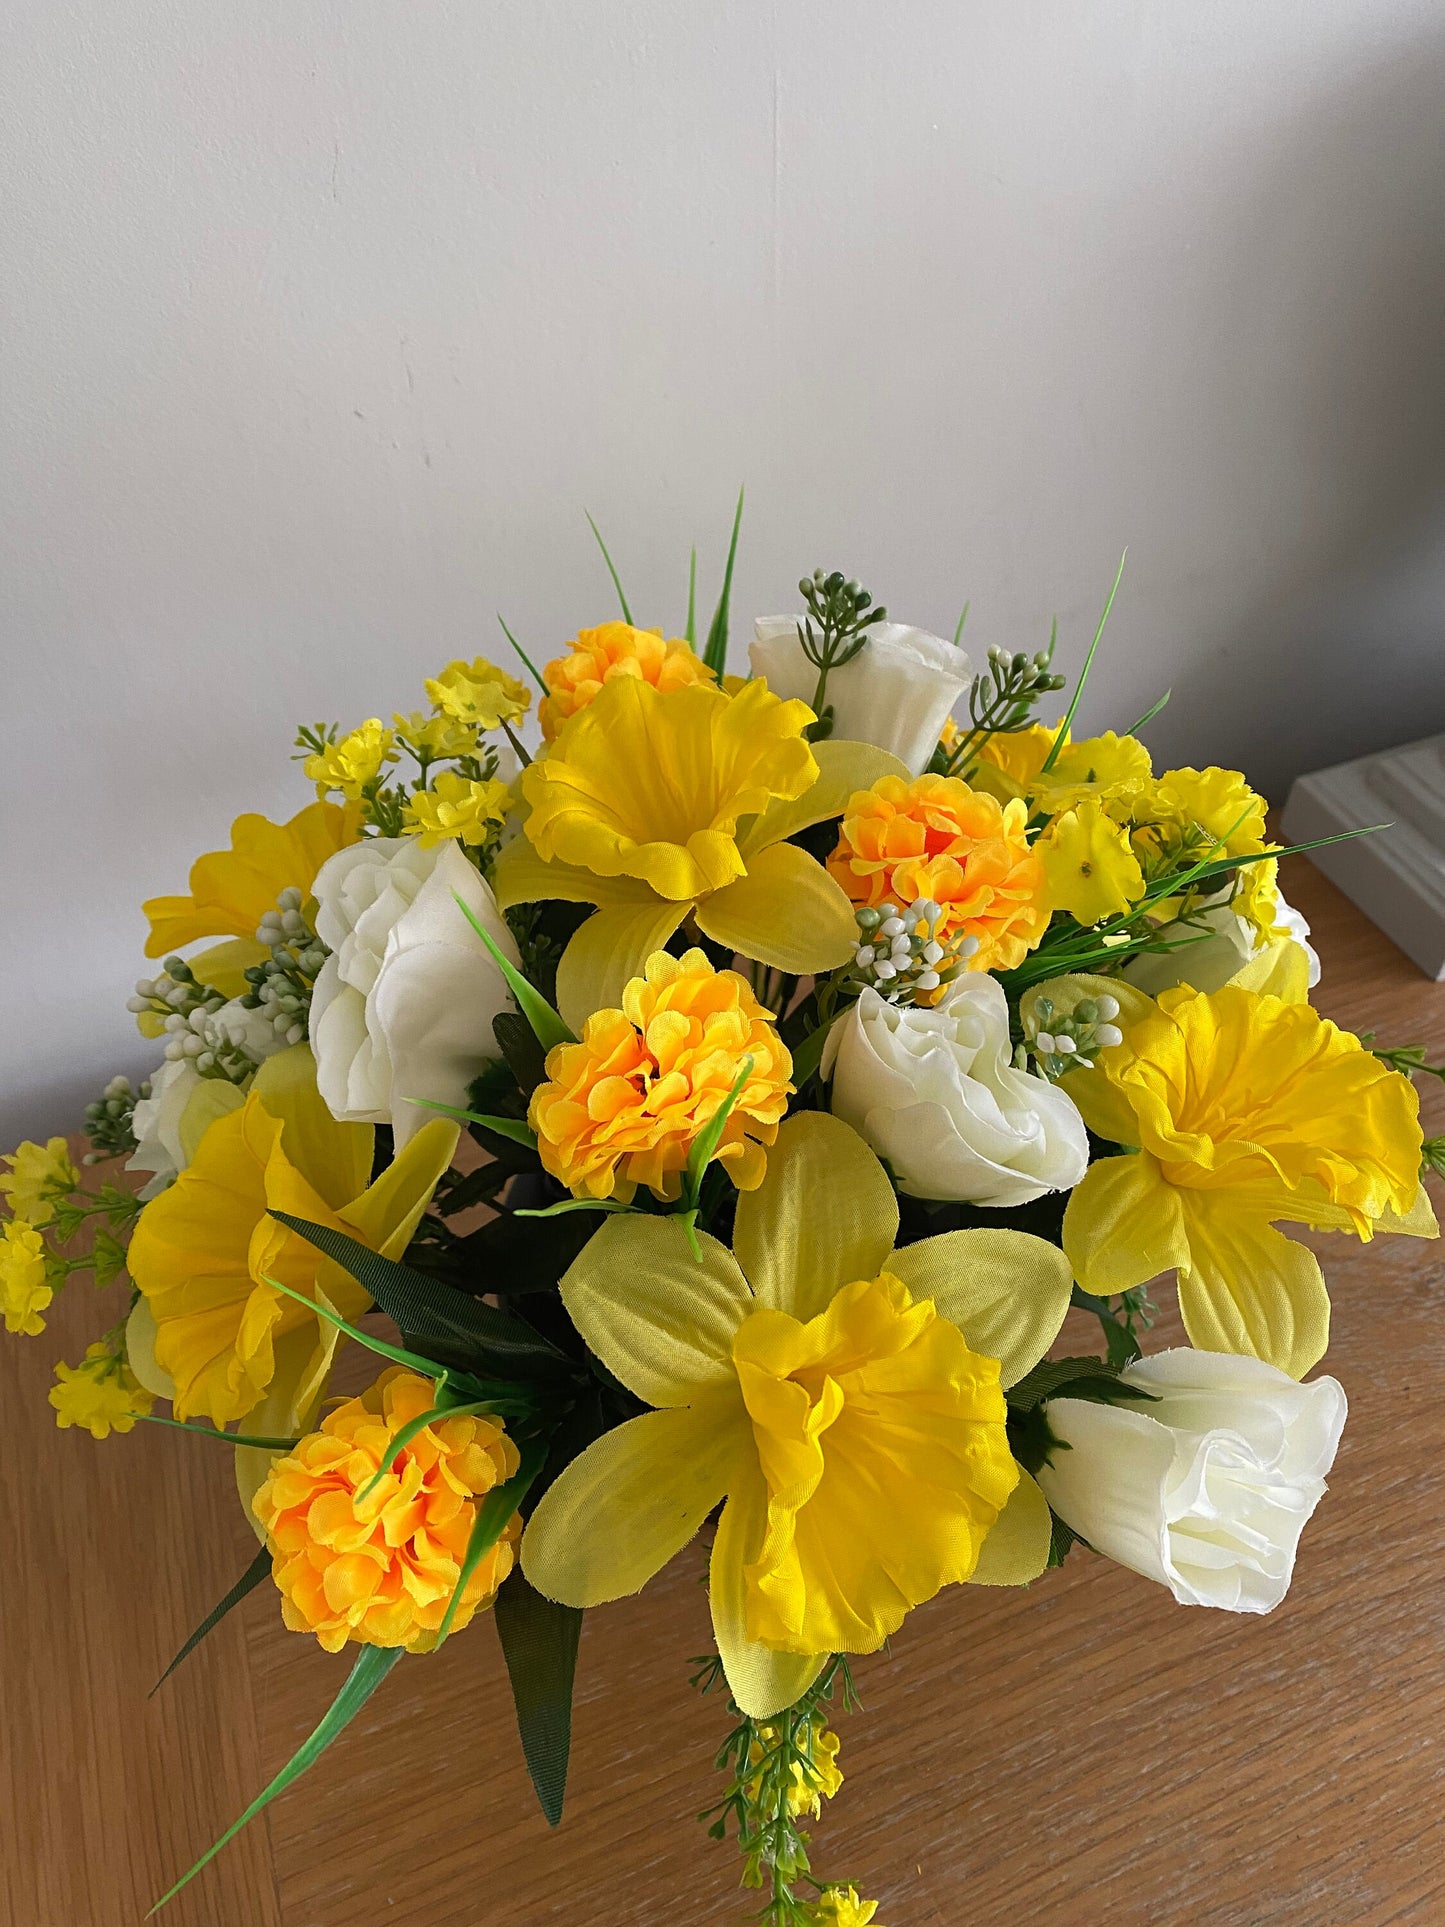 Artificial Flower Graveside Flower Arrangement Daffodils, Roses, Marigolds and Babies Breath